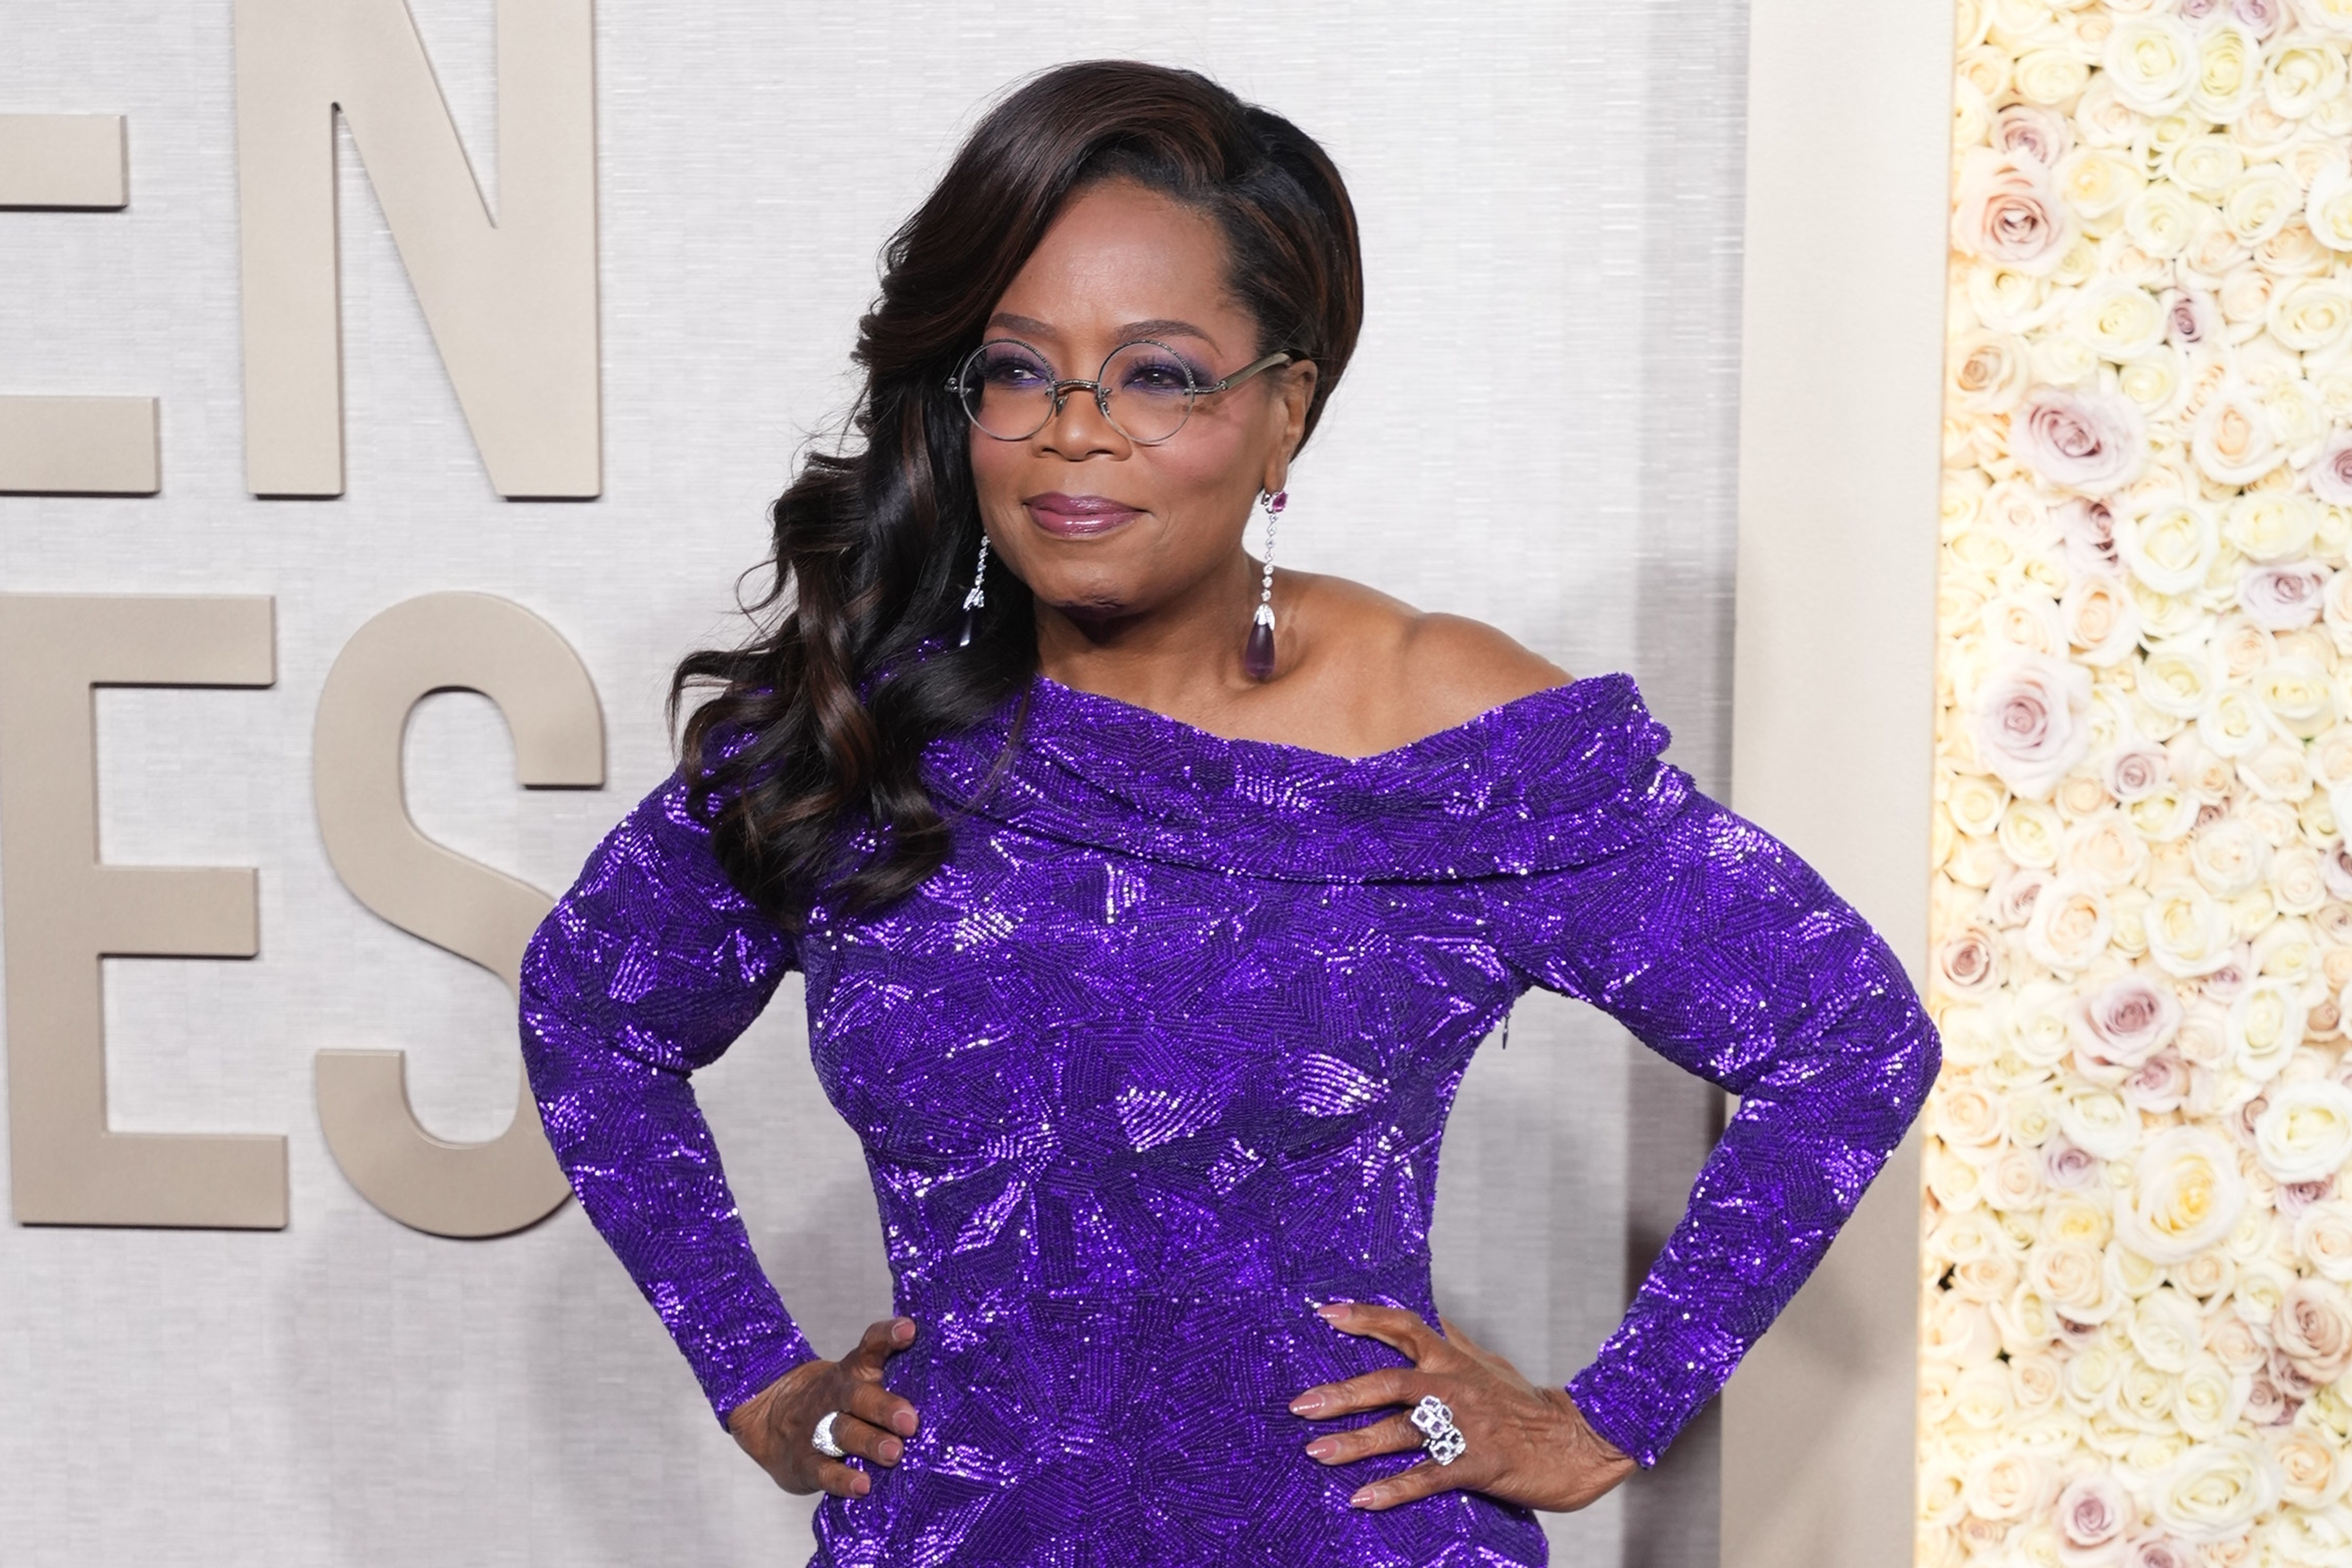 Fans wrote: 'stunning!' and 'Been waiting 40 years to hear Oprah Winfrey shout 'Oppenheimerrrrrr!''